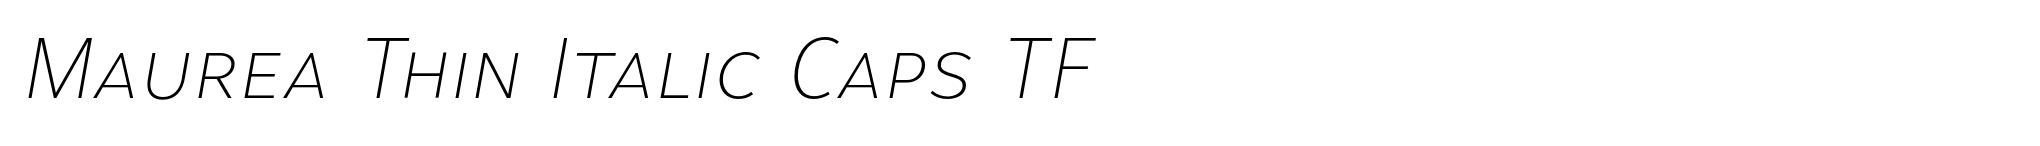 Maurea Thin Italic Caps TF image